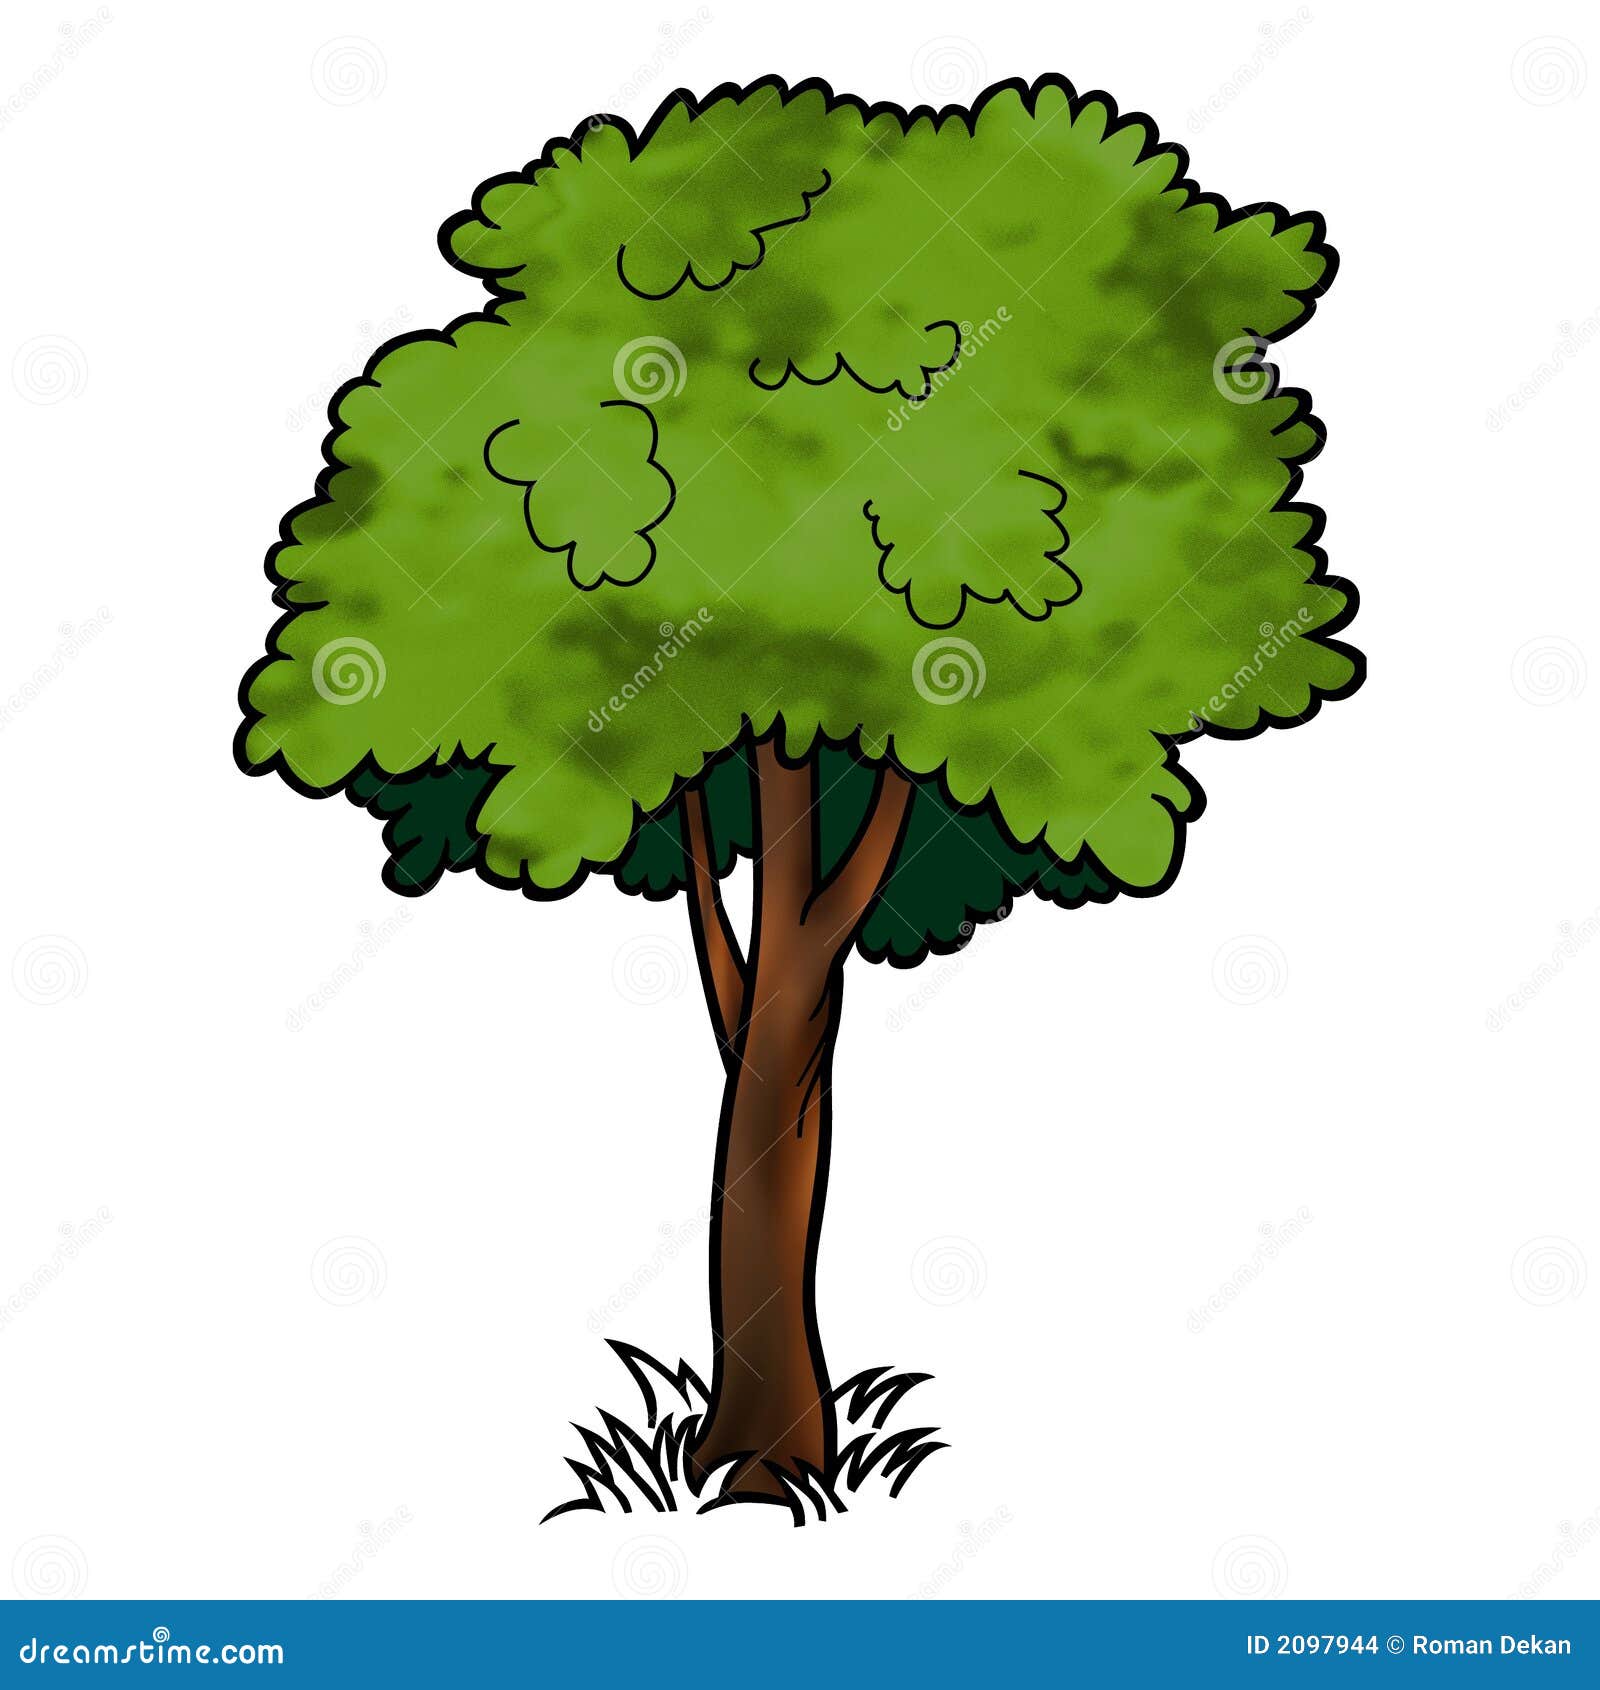 tree - deciduous